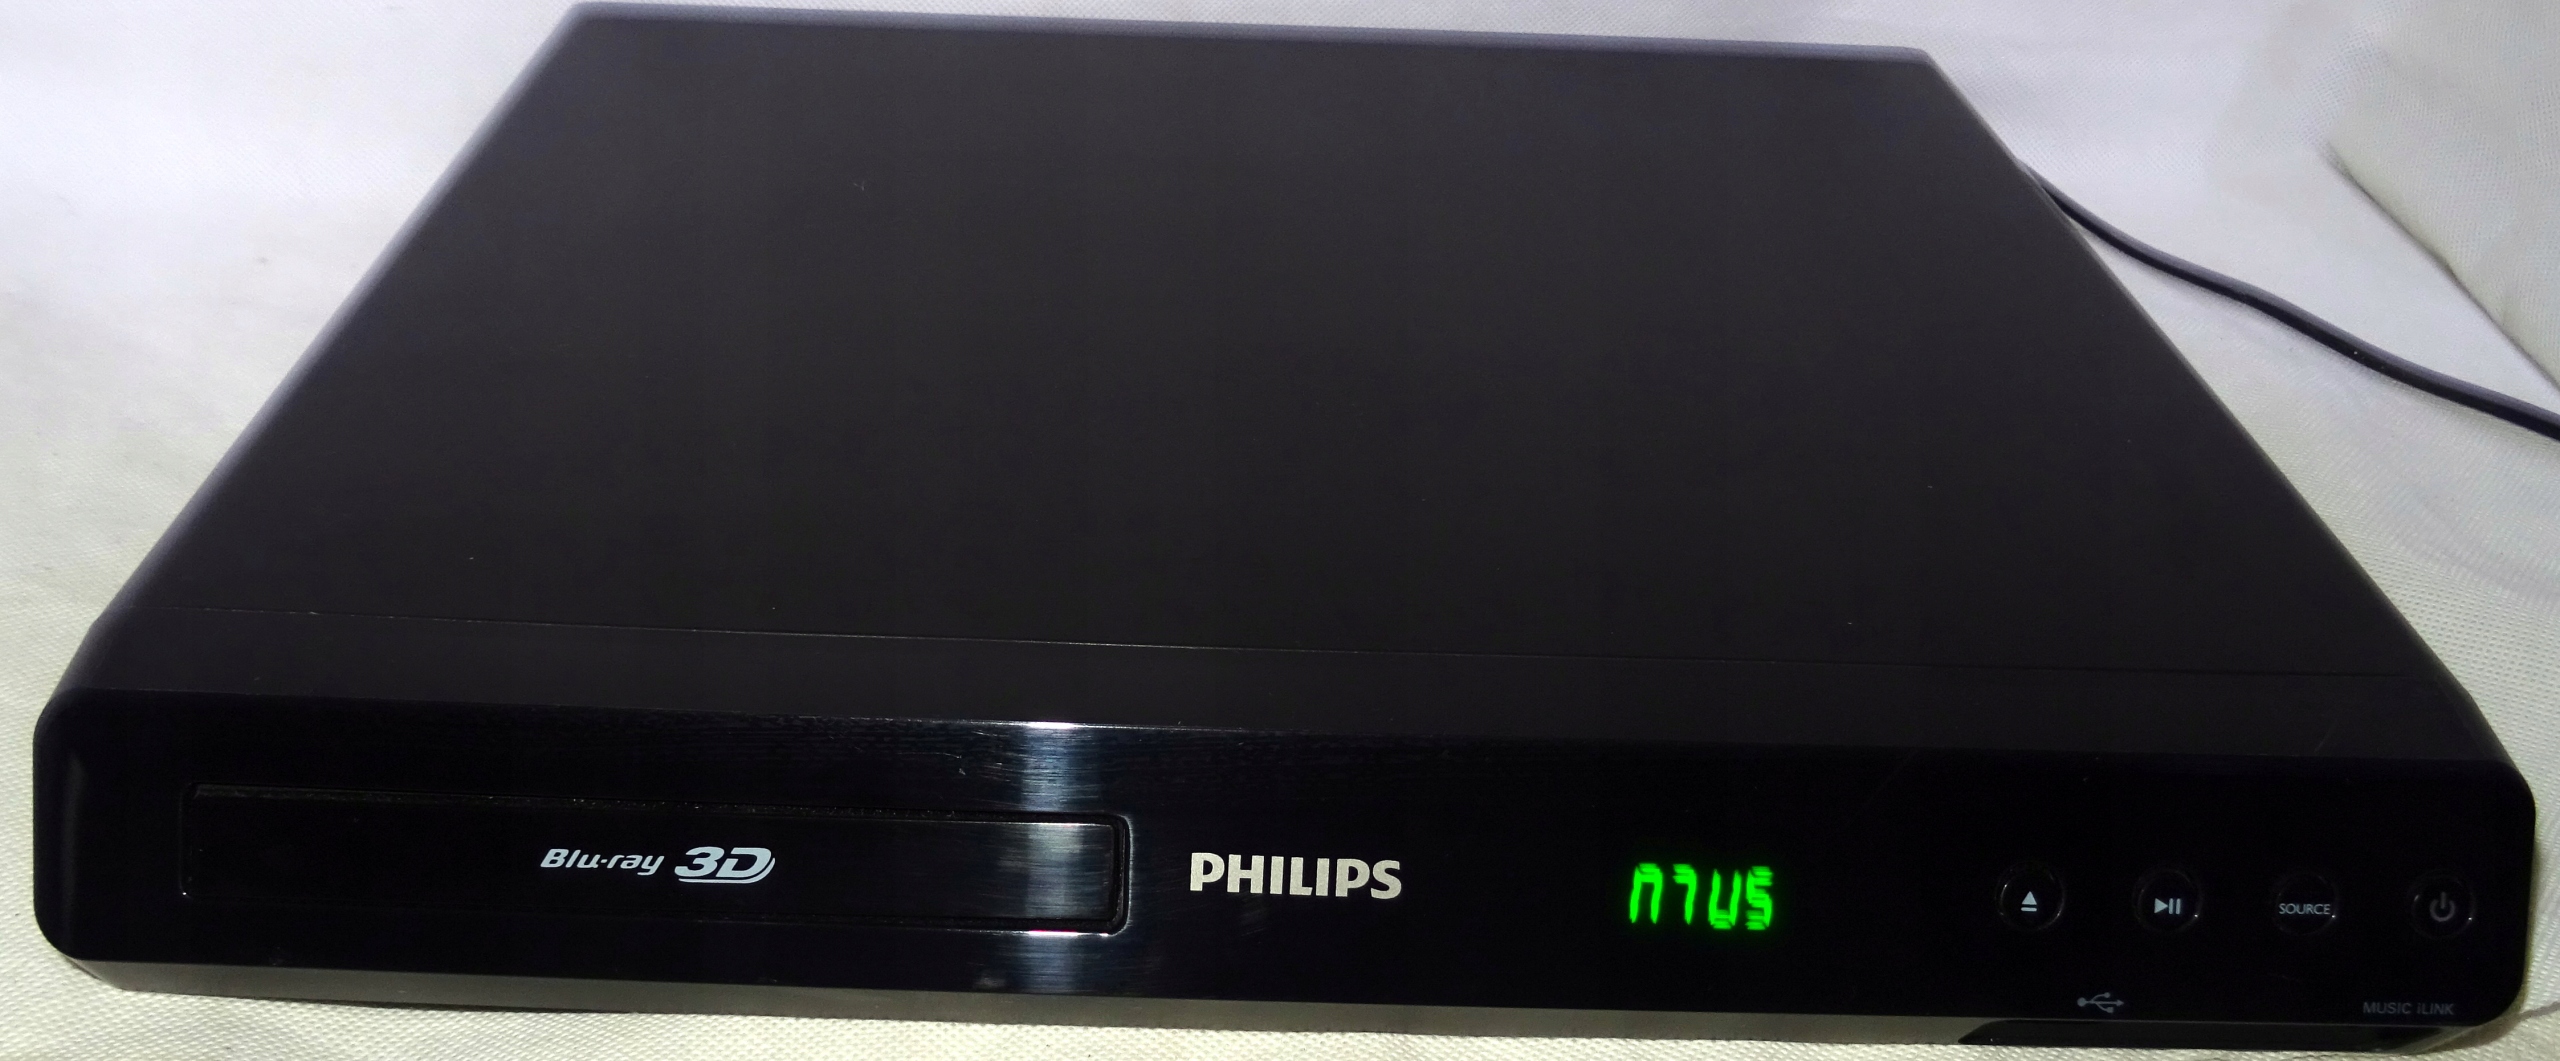 5000 series Blu-ray Disc player BDP5200/98